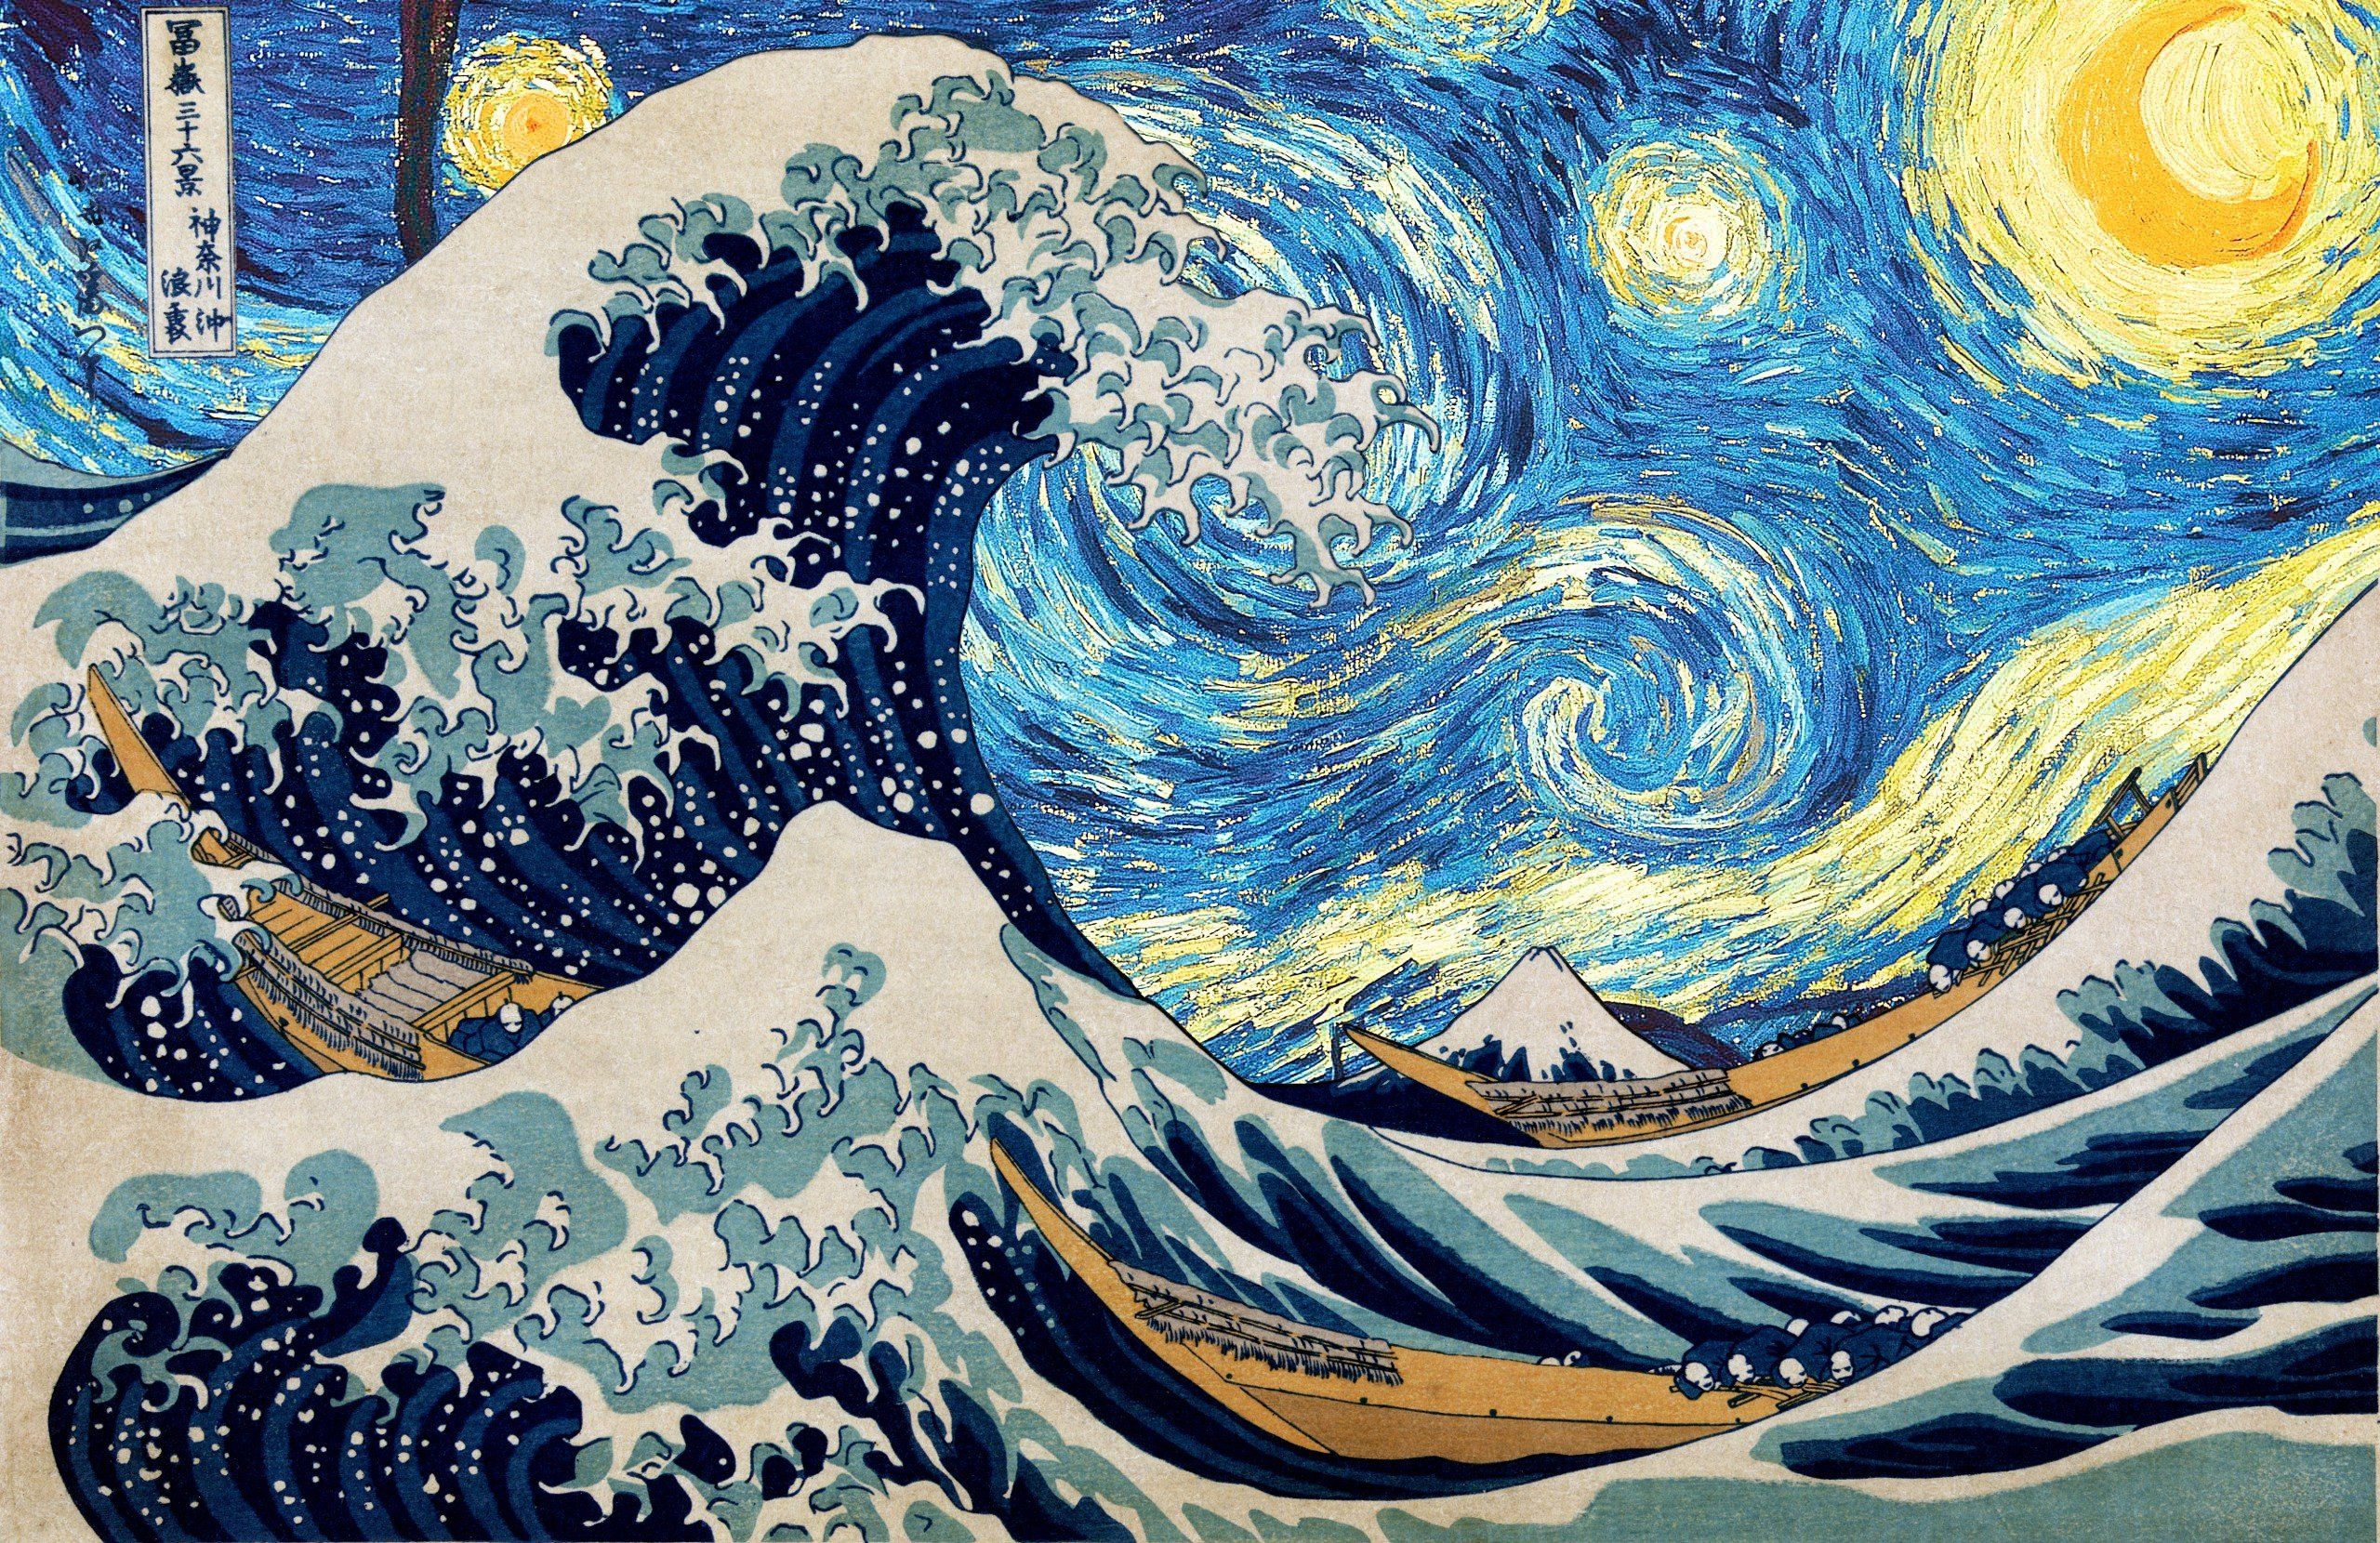 500 Van Gogh Pictures HD  Download Free Images on Unsplash